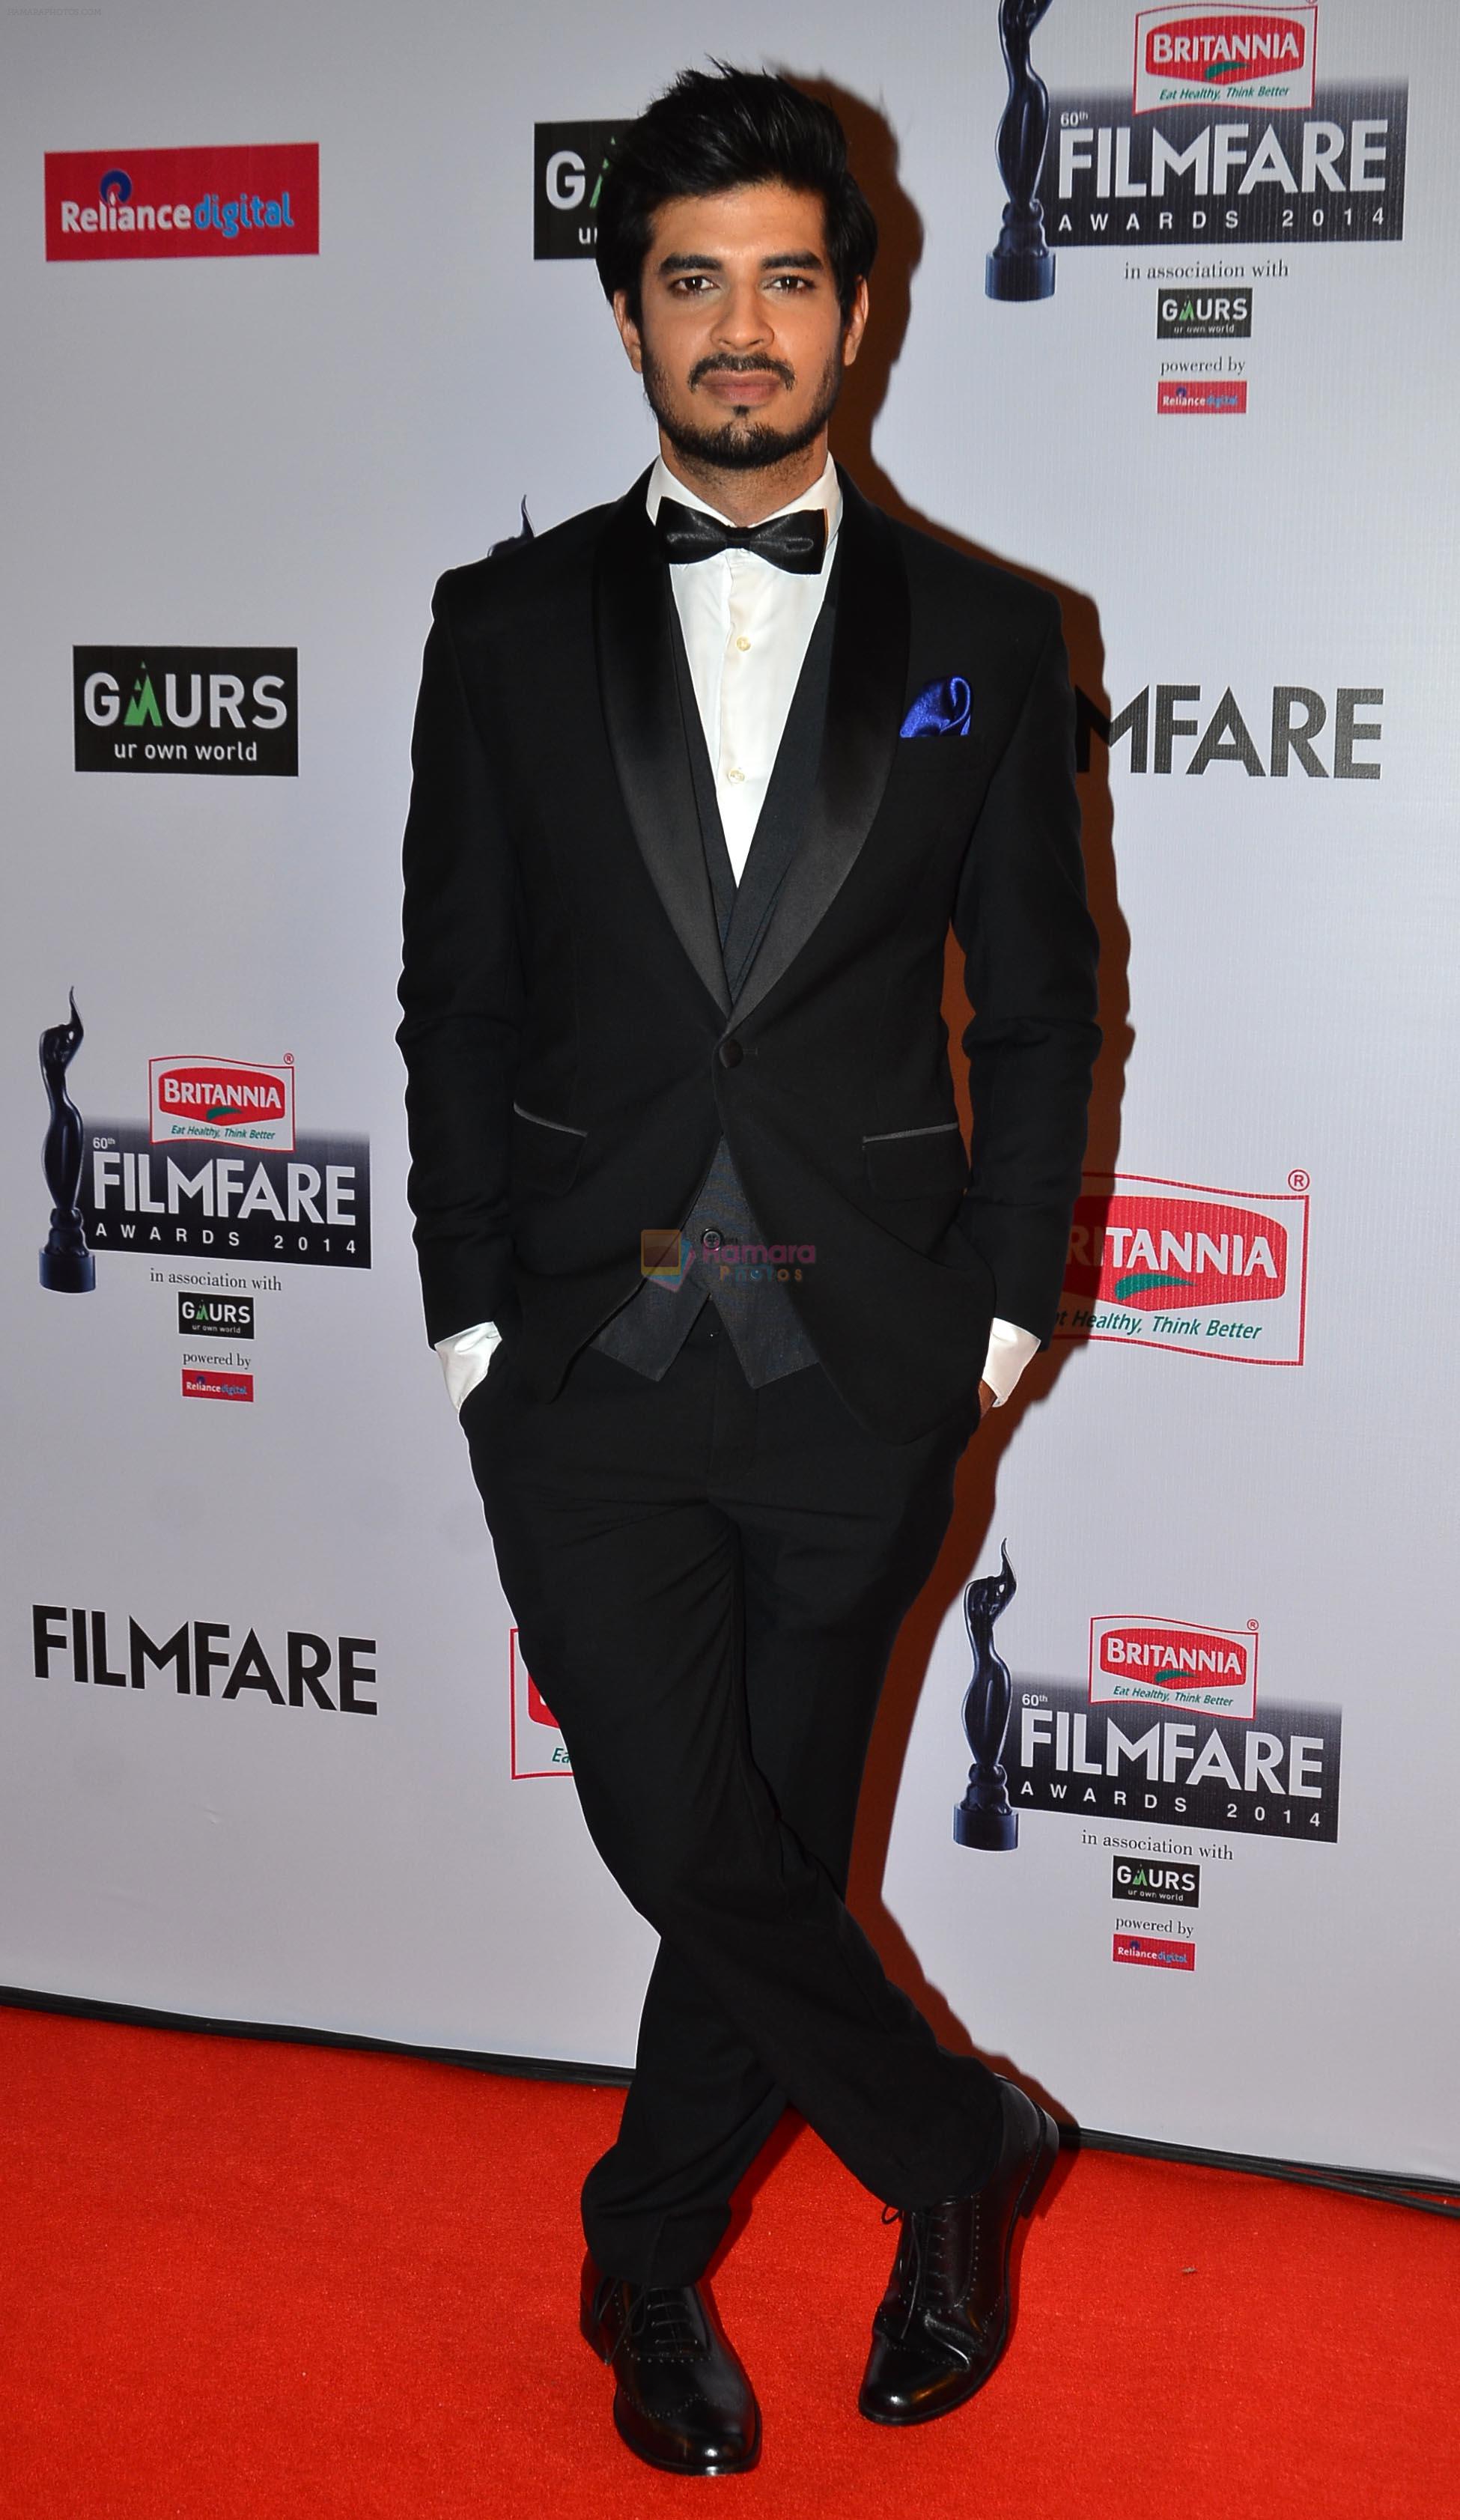 Tahir Raj Bhasin graces the red carpet at the 60th Britannia Filmfare Awards